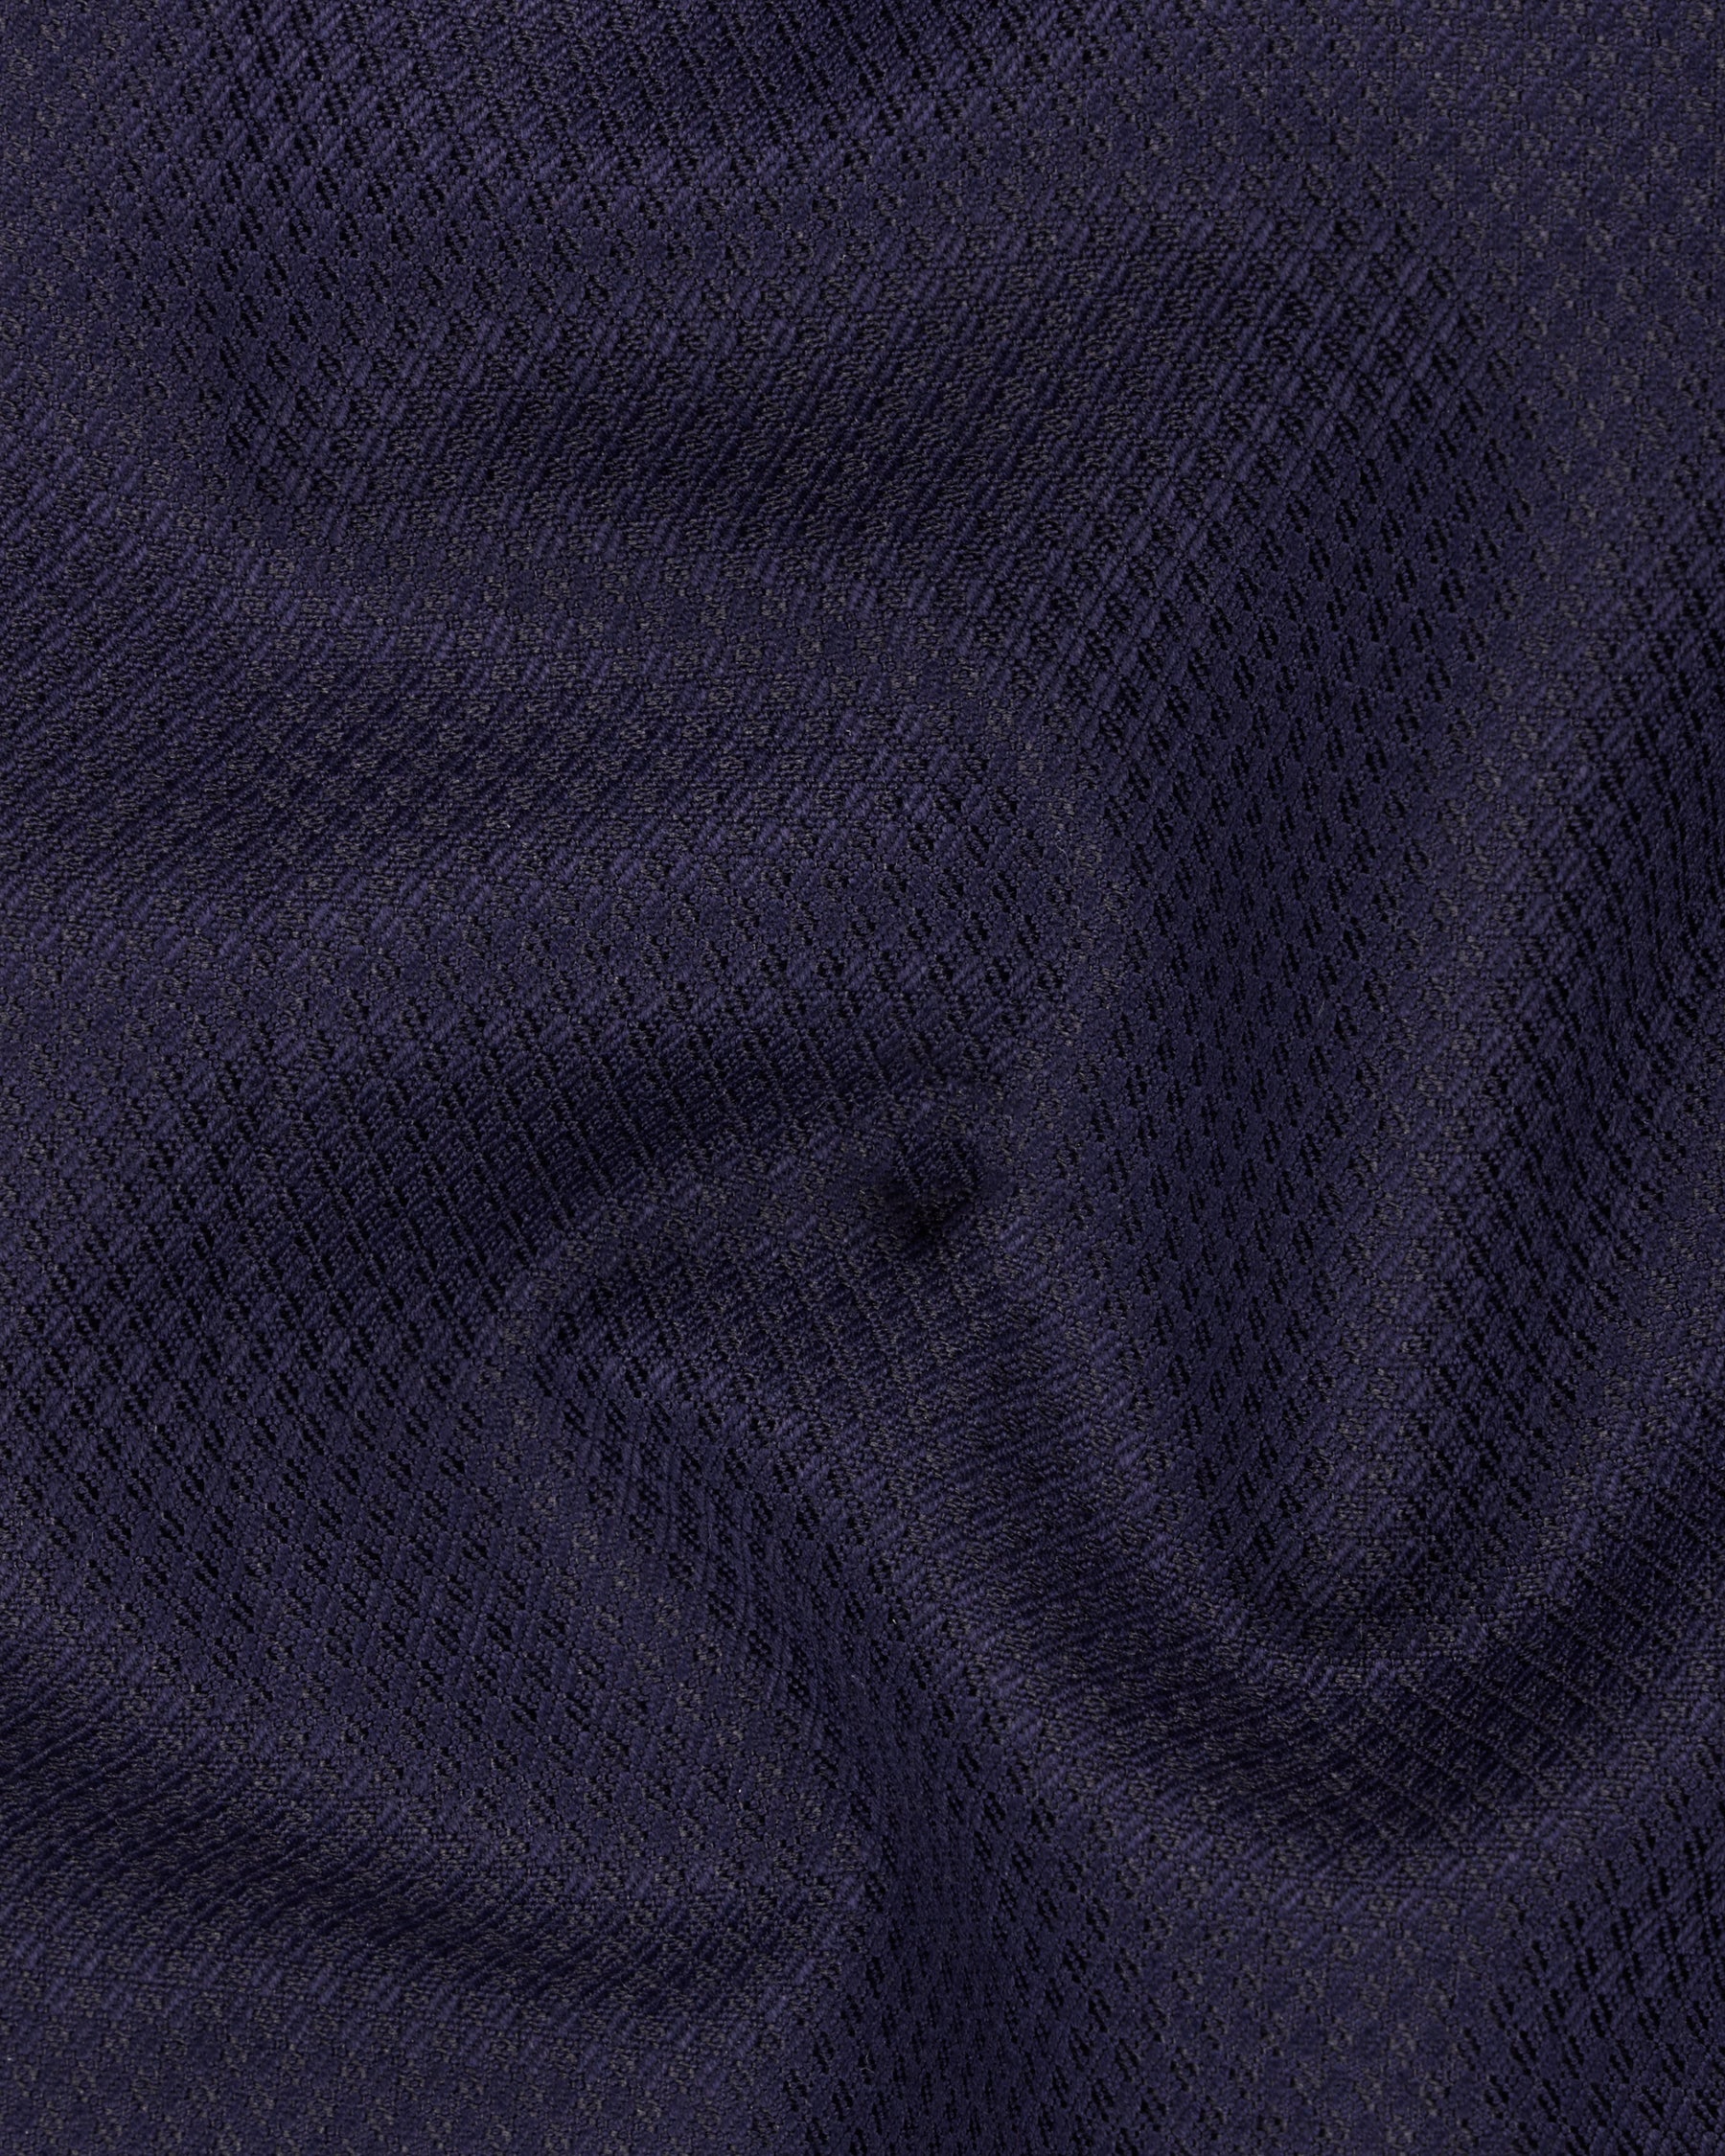 Ebony Clay Blue Stretchable Pants T2218-28, T2218-30, T2218-32, T2218-34, T2218-36, T2218-38, T2218-40, T2218-42, T2218-44